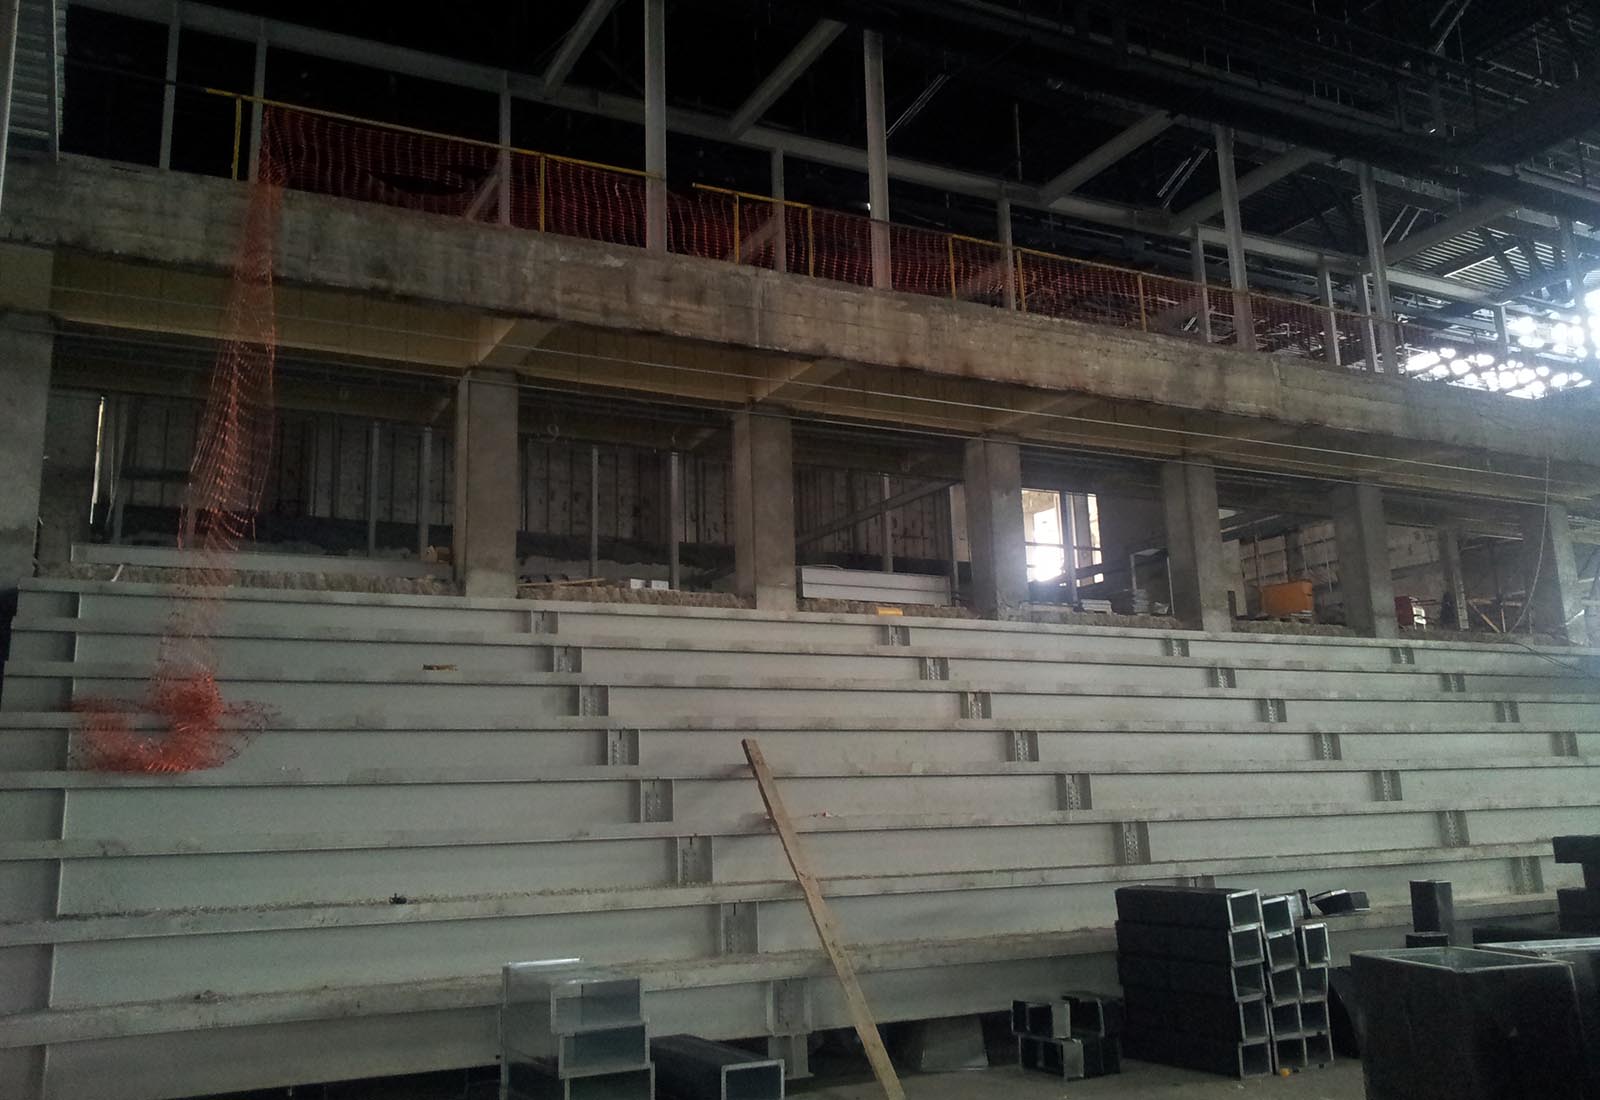 Baku sport hall - Building of the north grandstand